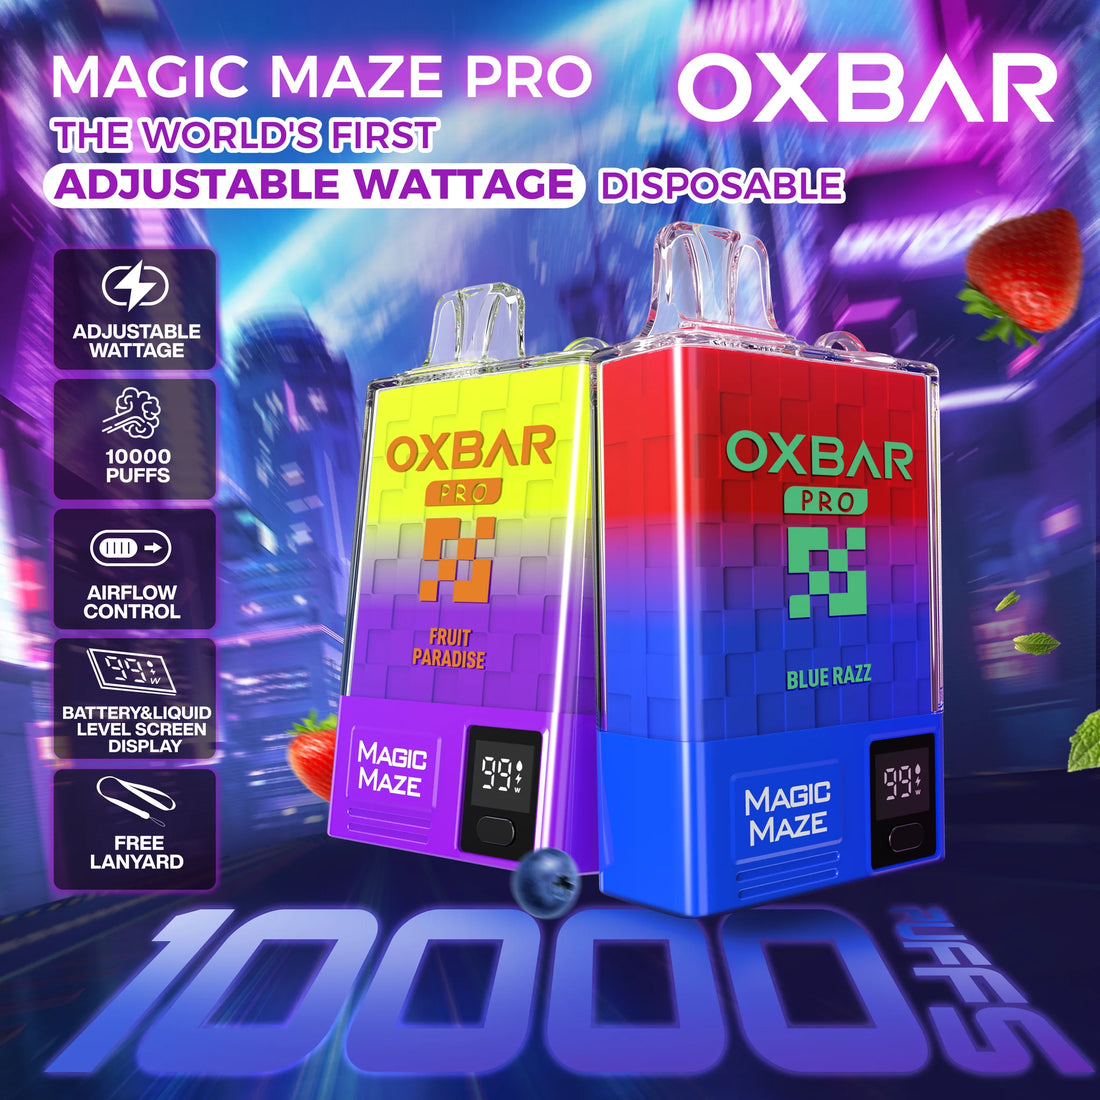 Oxbar Magic Maze Pro 10000 Puff Disposable Vape - Which Aroma to Choose?